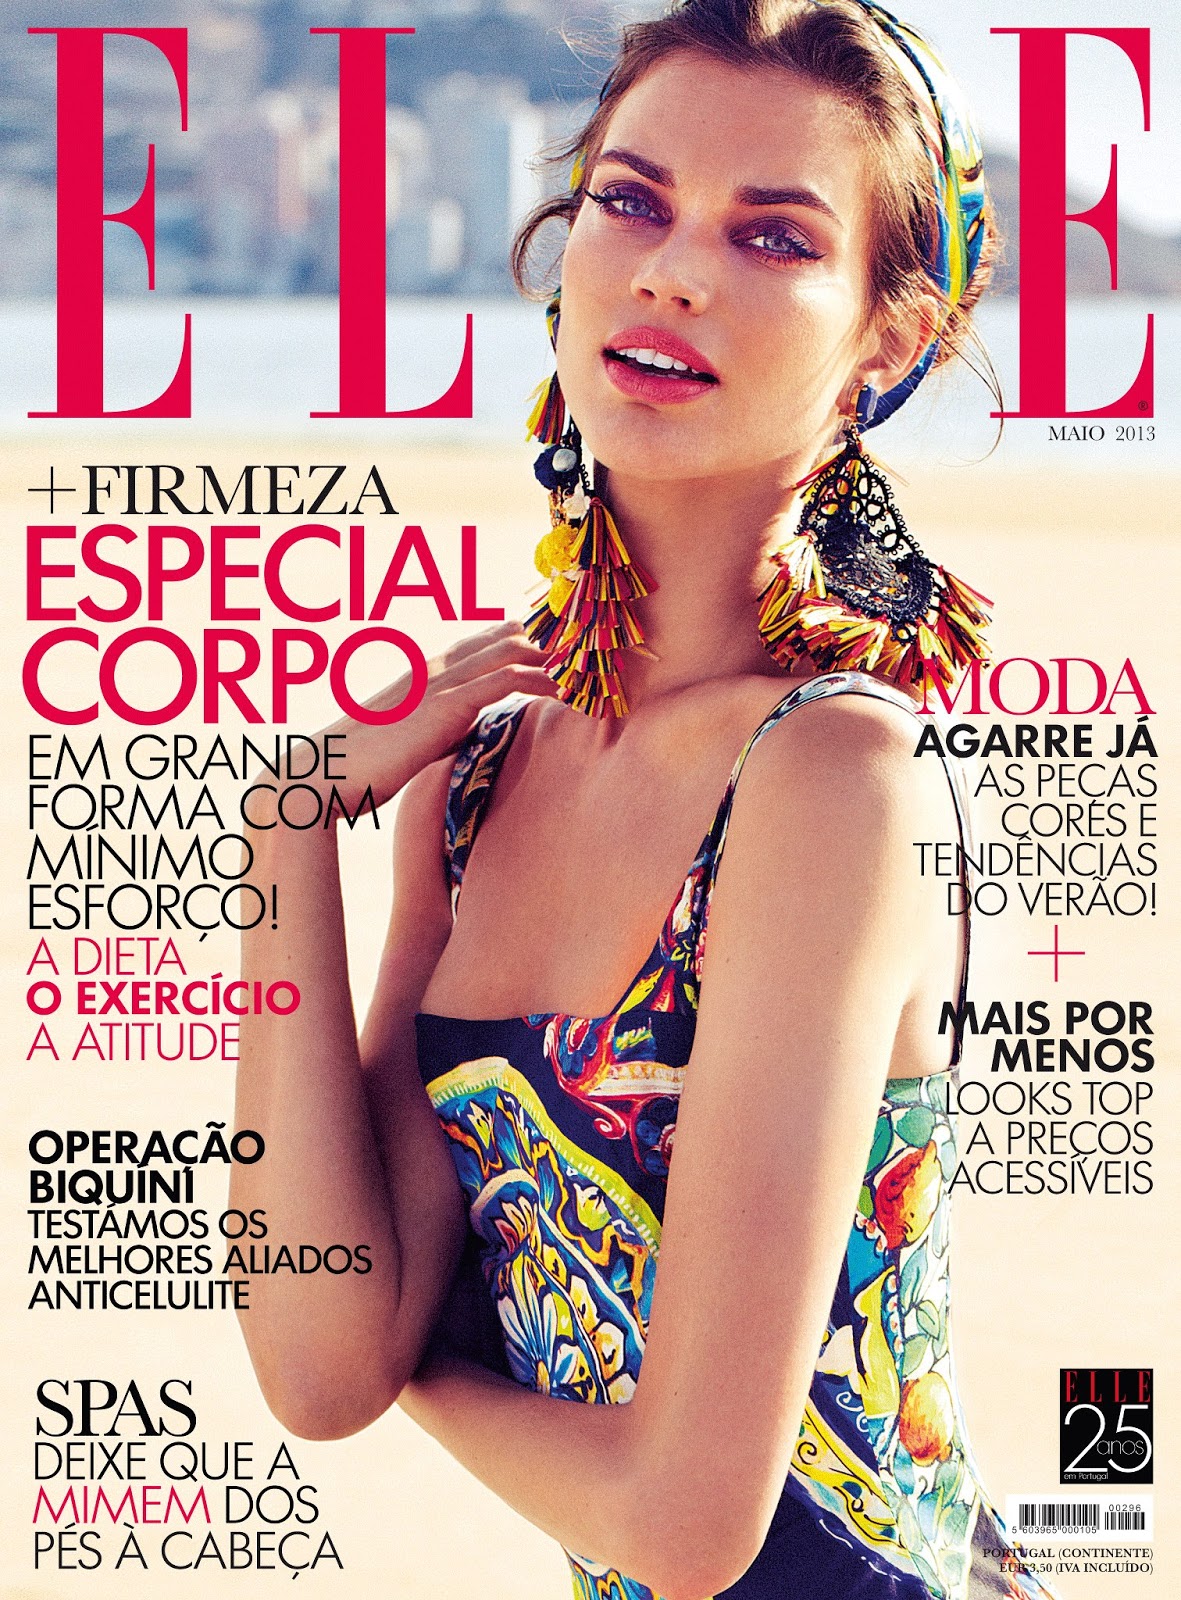 http://3.bp.blogspot.com/-gNM00VhdjY4/UWartq2oooI/AAAAAAABPY8/DEkdIDRHgtI/s1600/Elle-Portugal-April-2013-Rianne-ten-Haken-Magazine-Cover.jpg